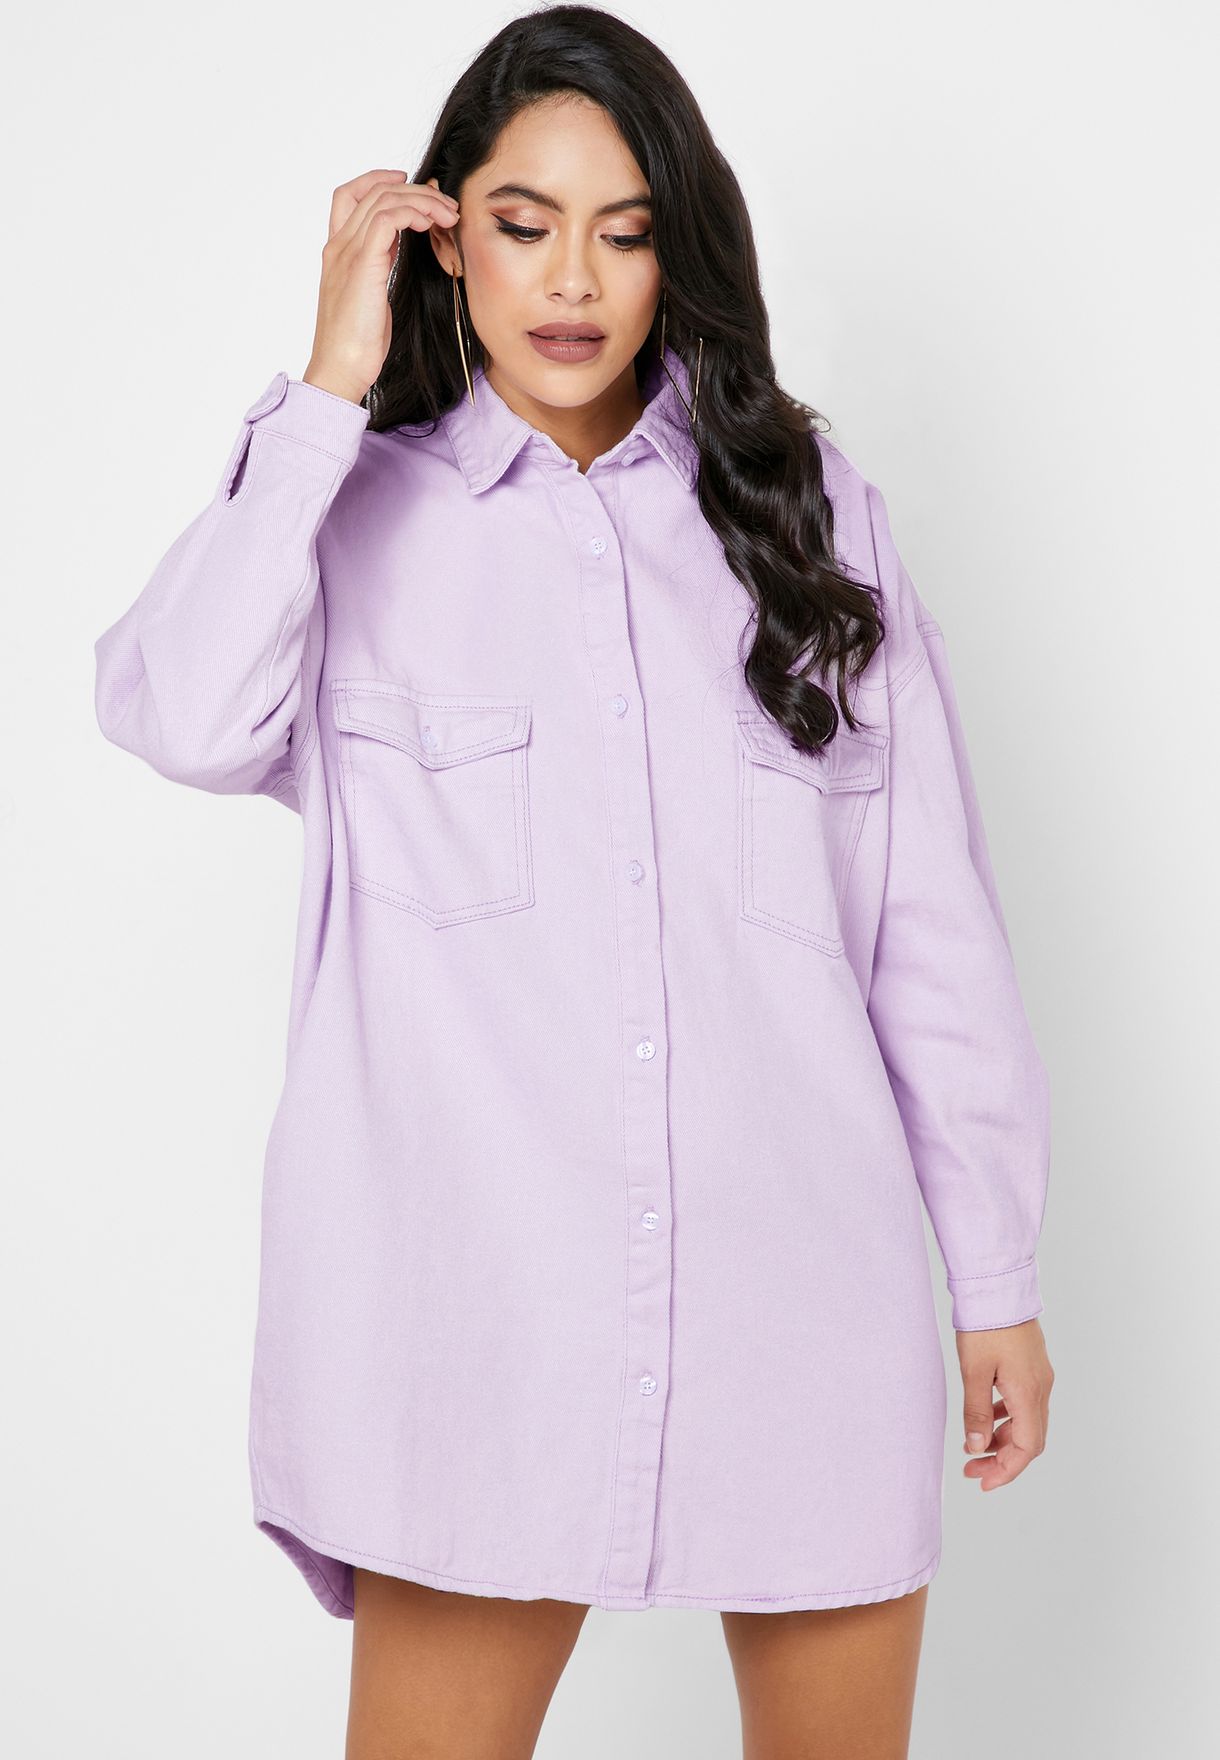 Lilac Shirt Dress Hot Sale, UP TO 65 ...